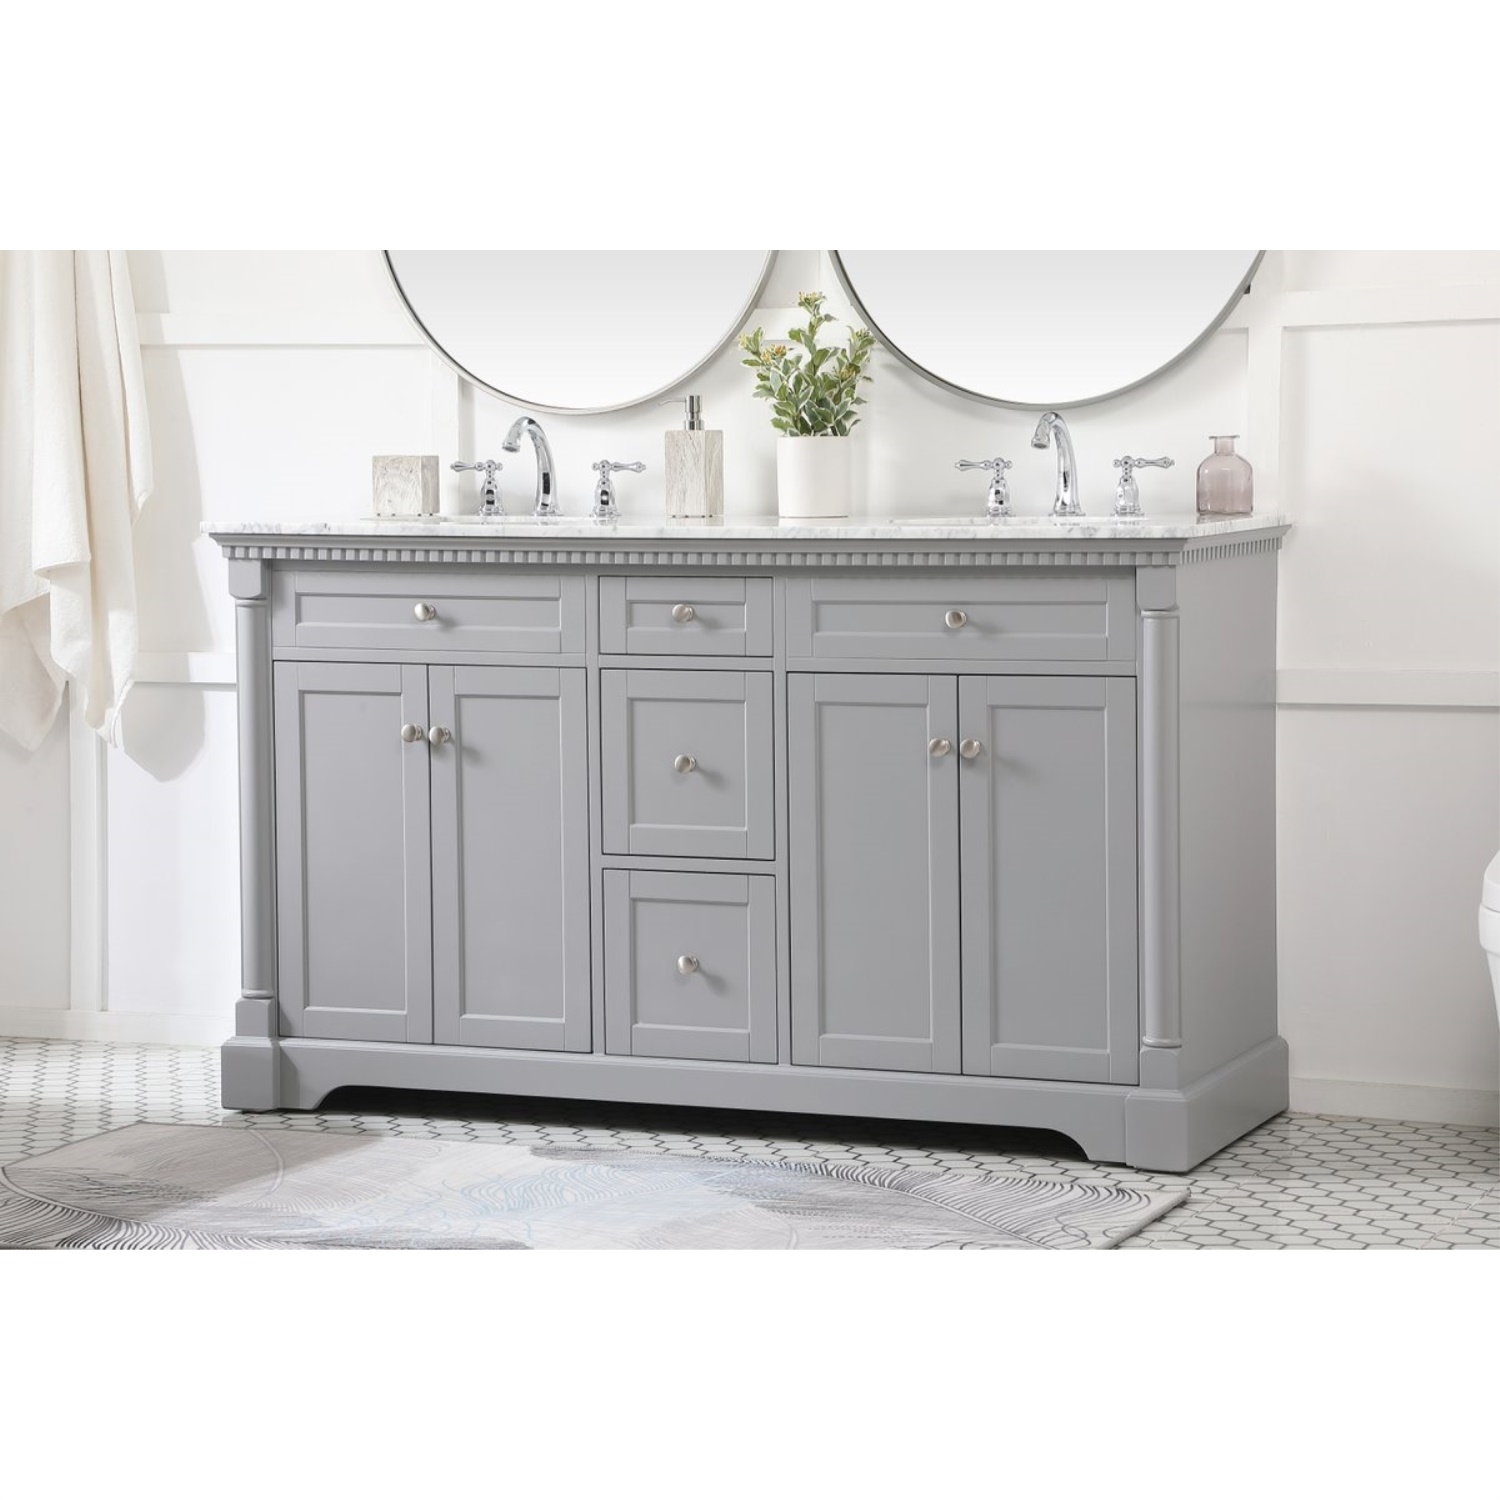 Elegant Decor 60 inch double bathroom vanity in Grey